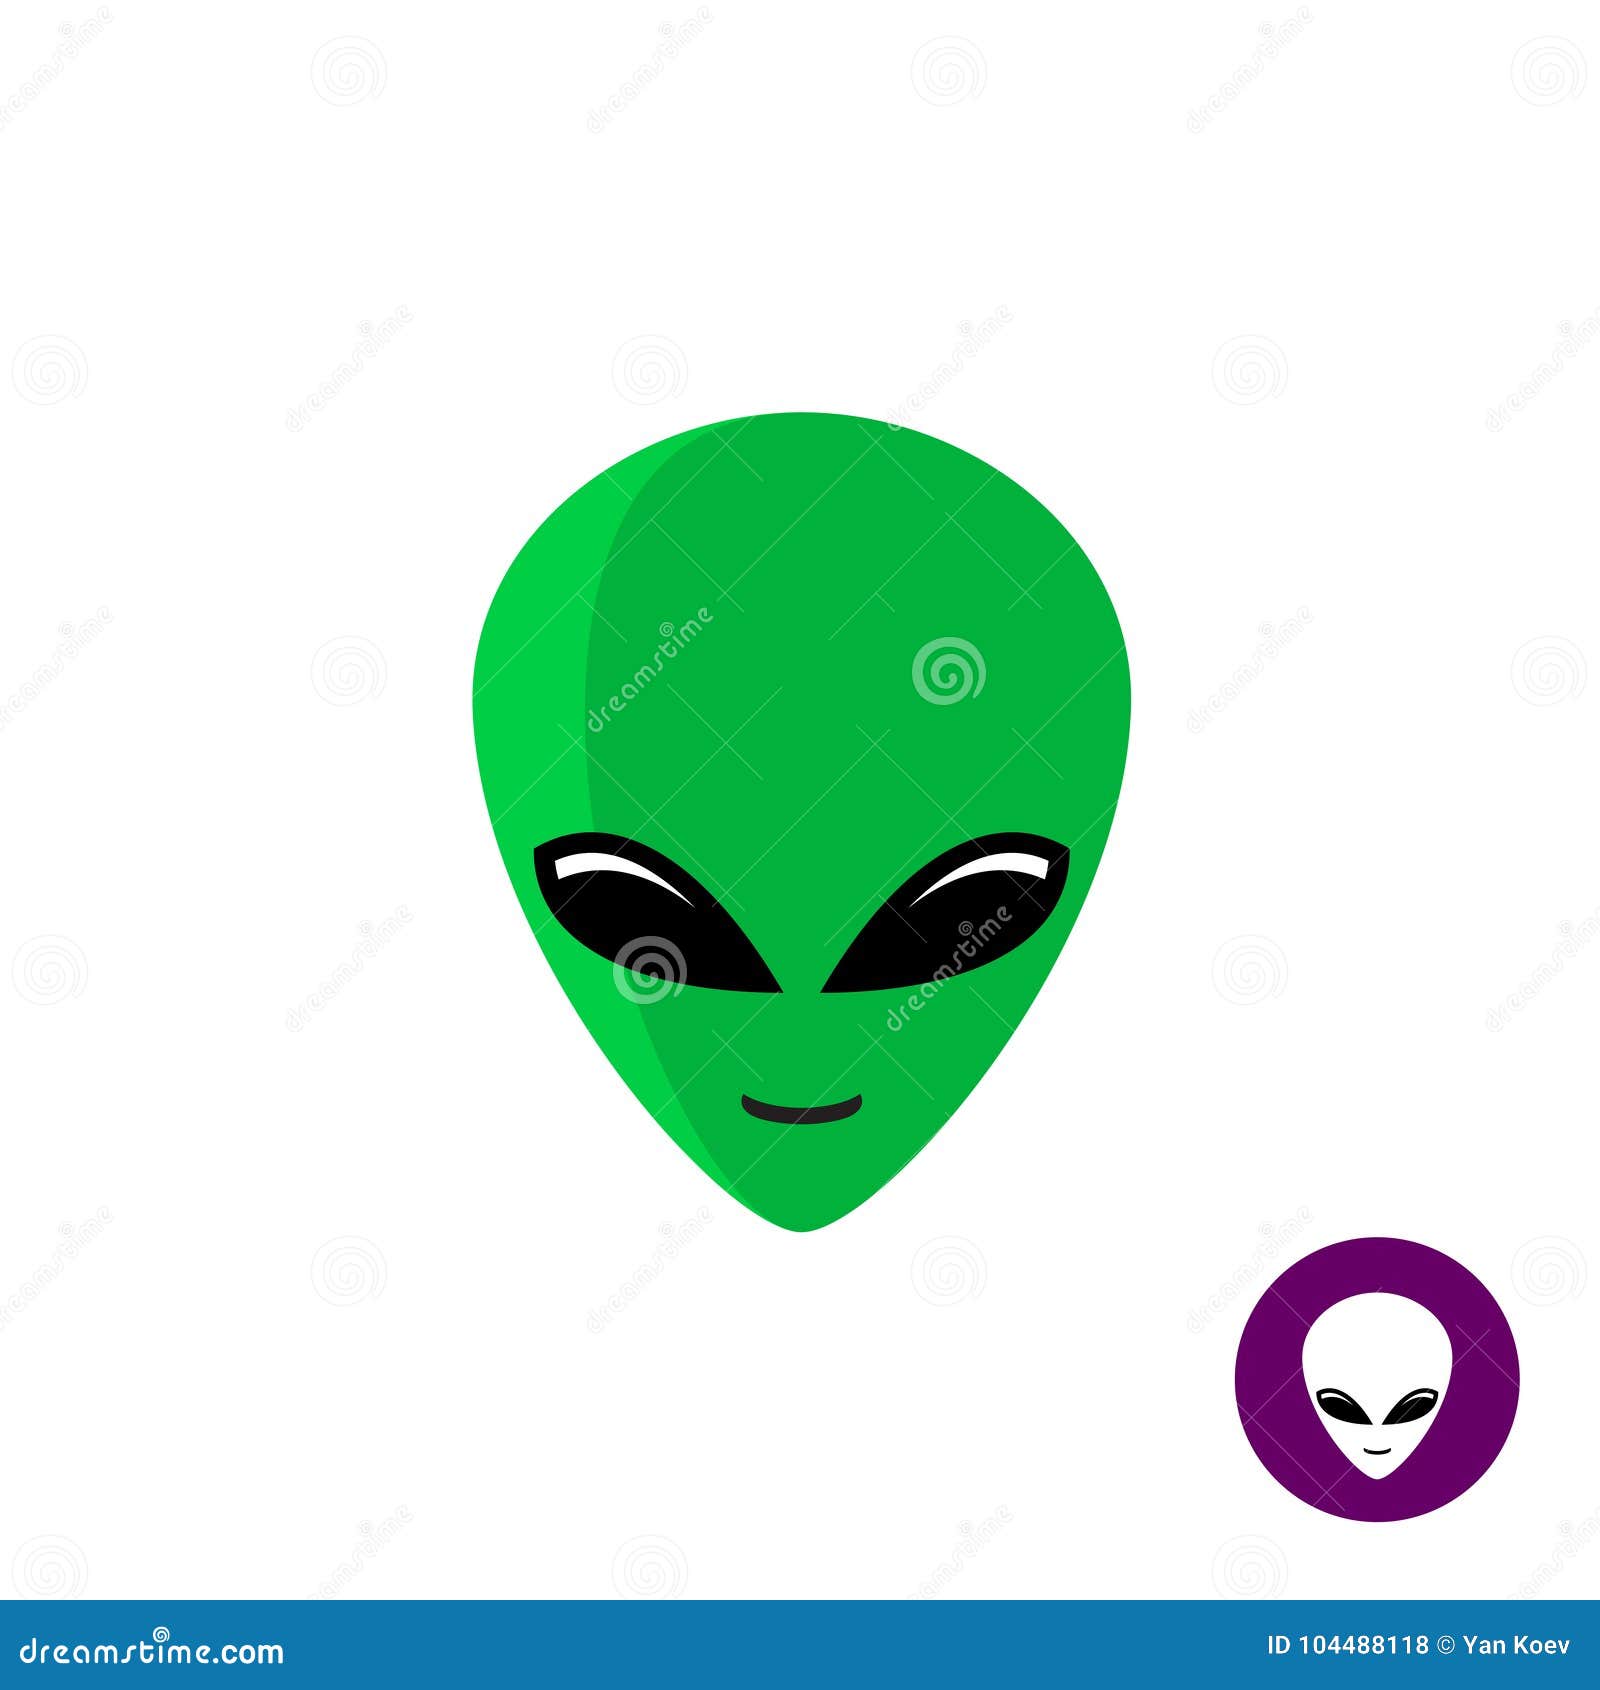 alien face logo. planet ufo intruder.